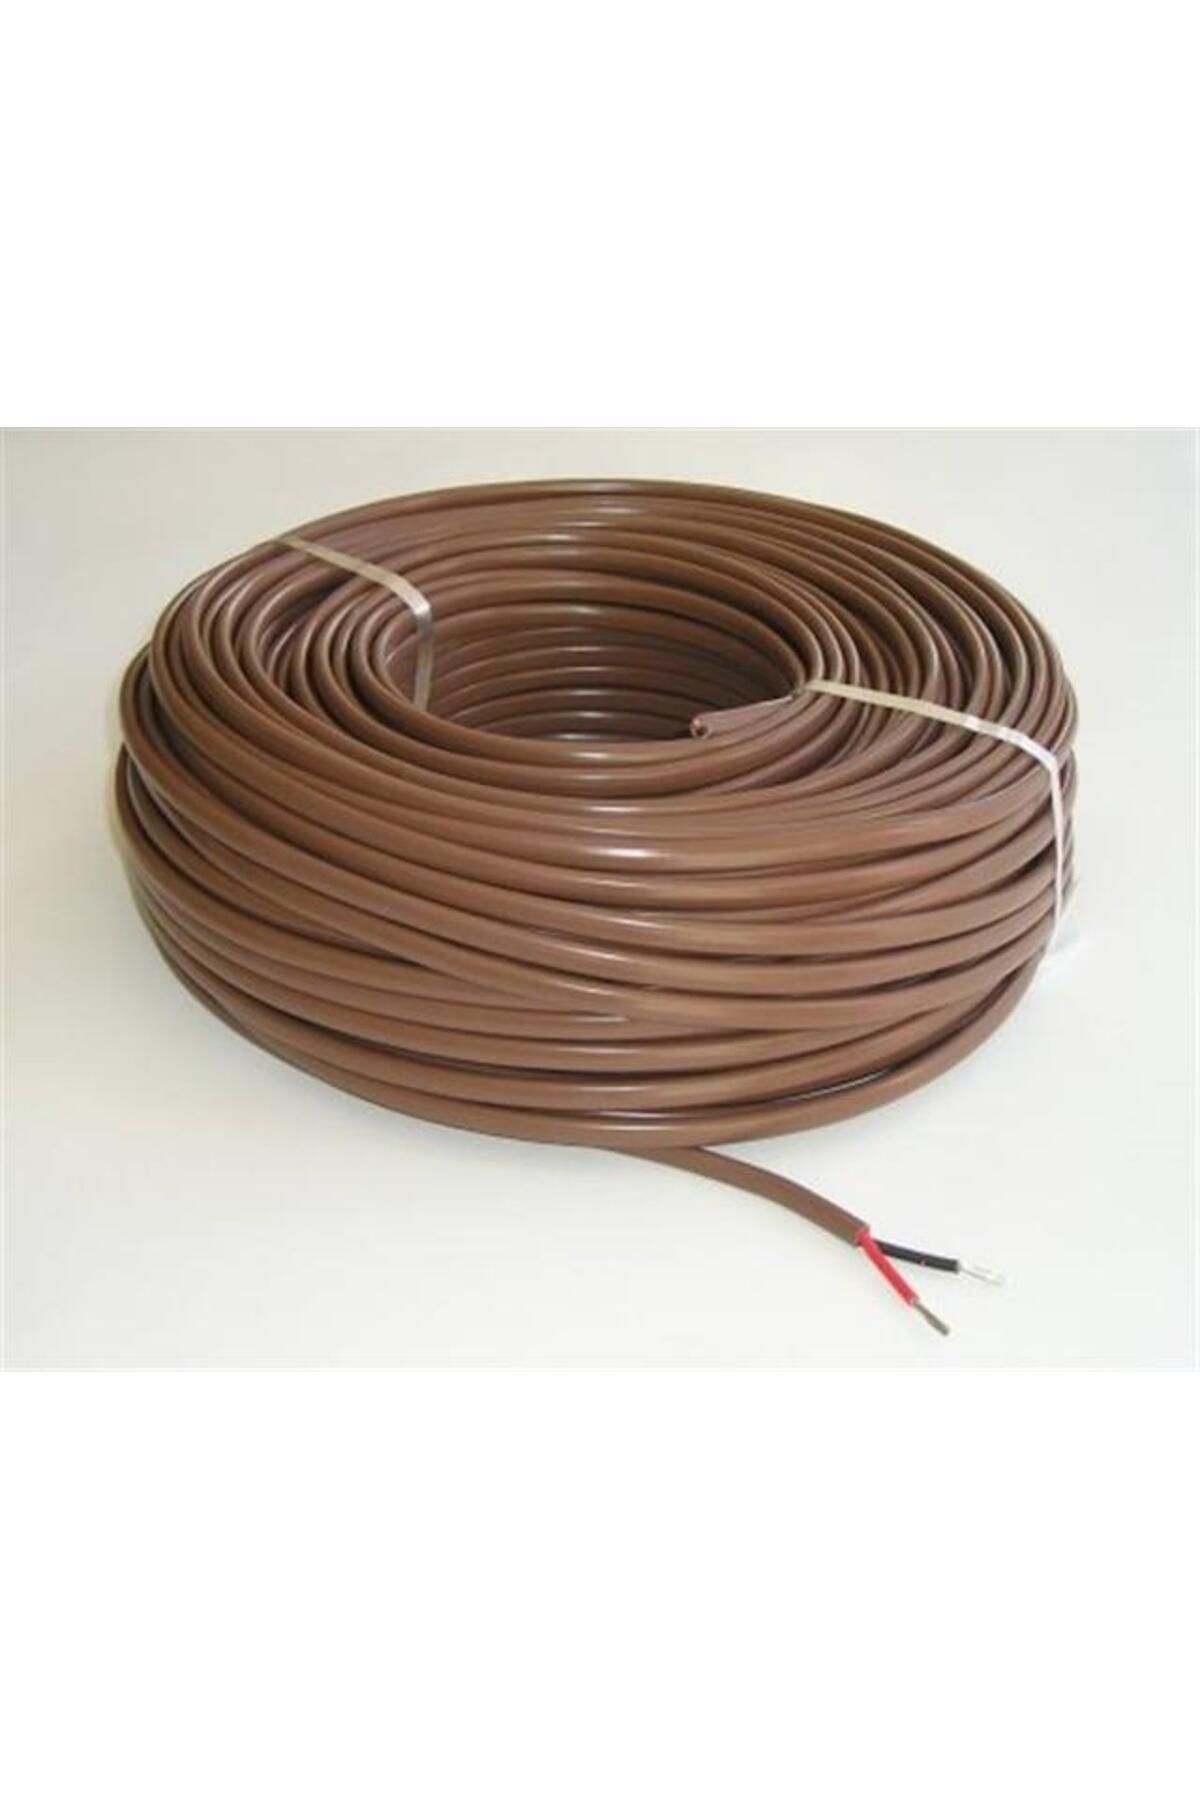 Sevtel Marin Yassı Kahverengi Kablo 2x2,5 mm